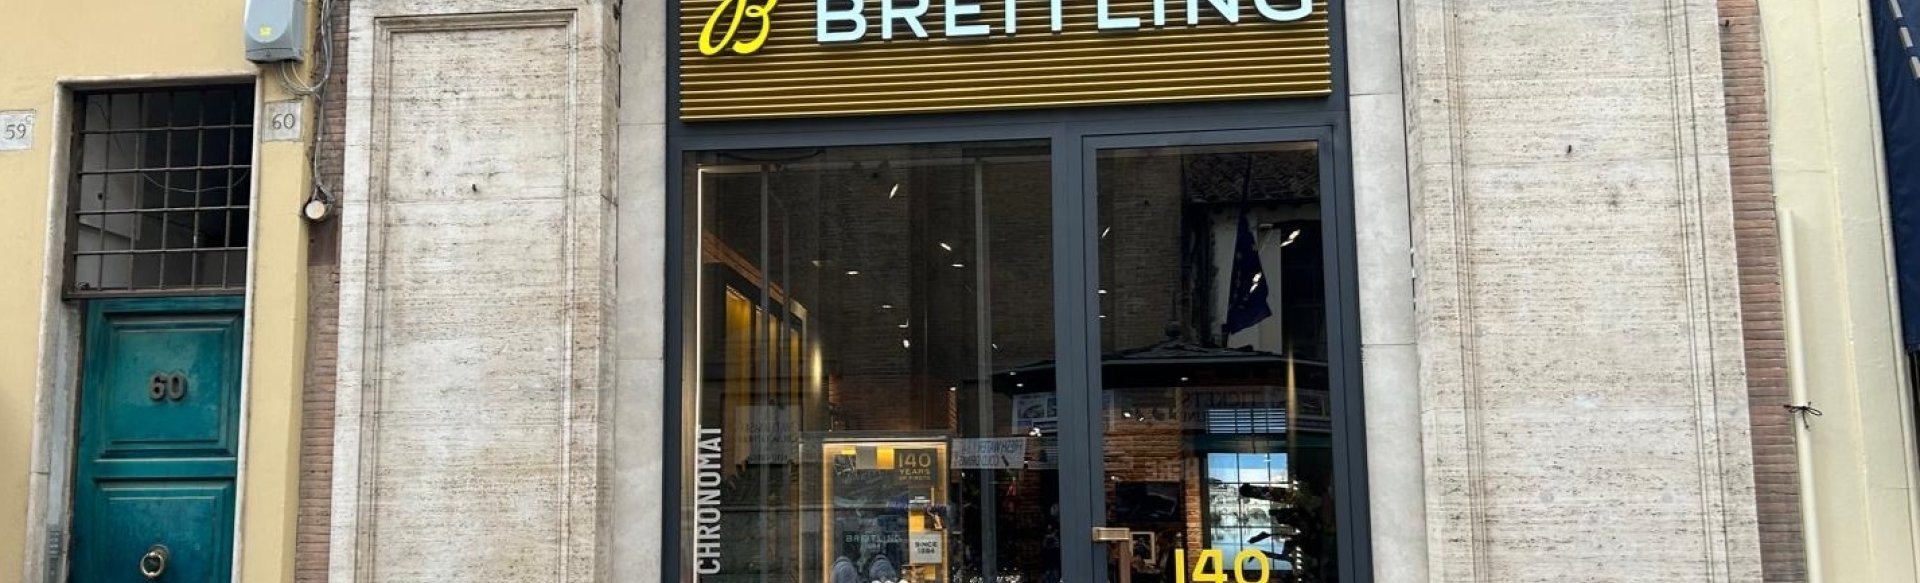 Breitling Boutique Roma